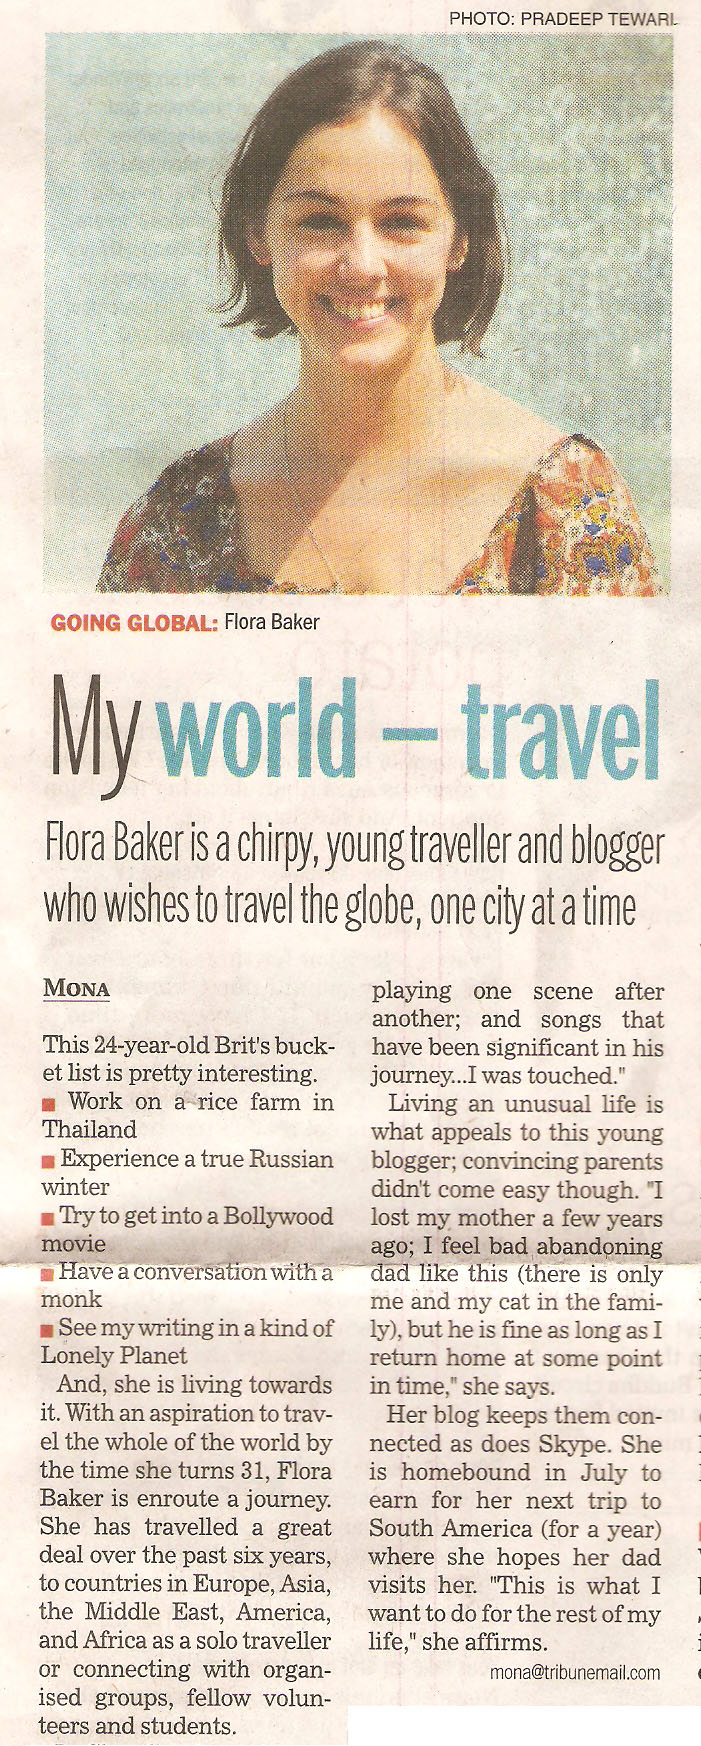 Flora Baker, The Tribune, Pg 1, May 12, 2012 